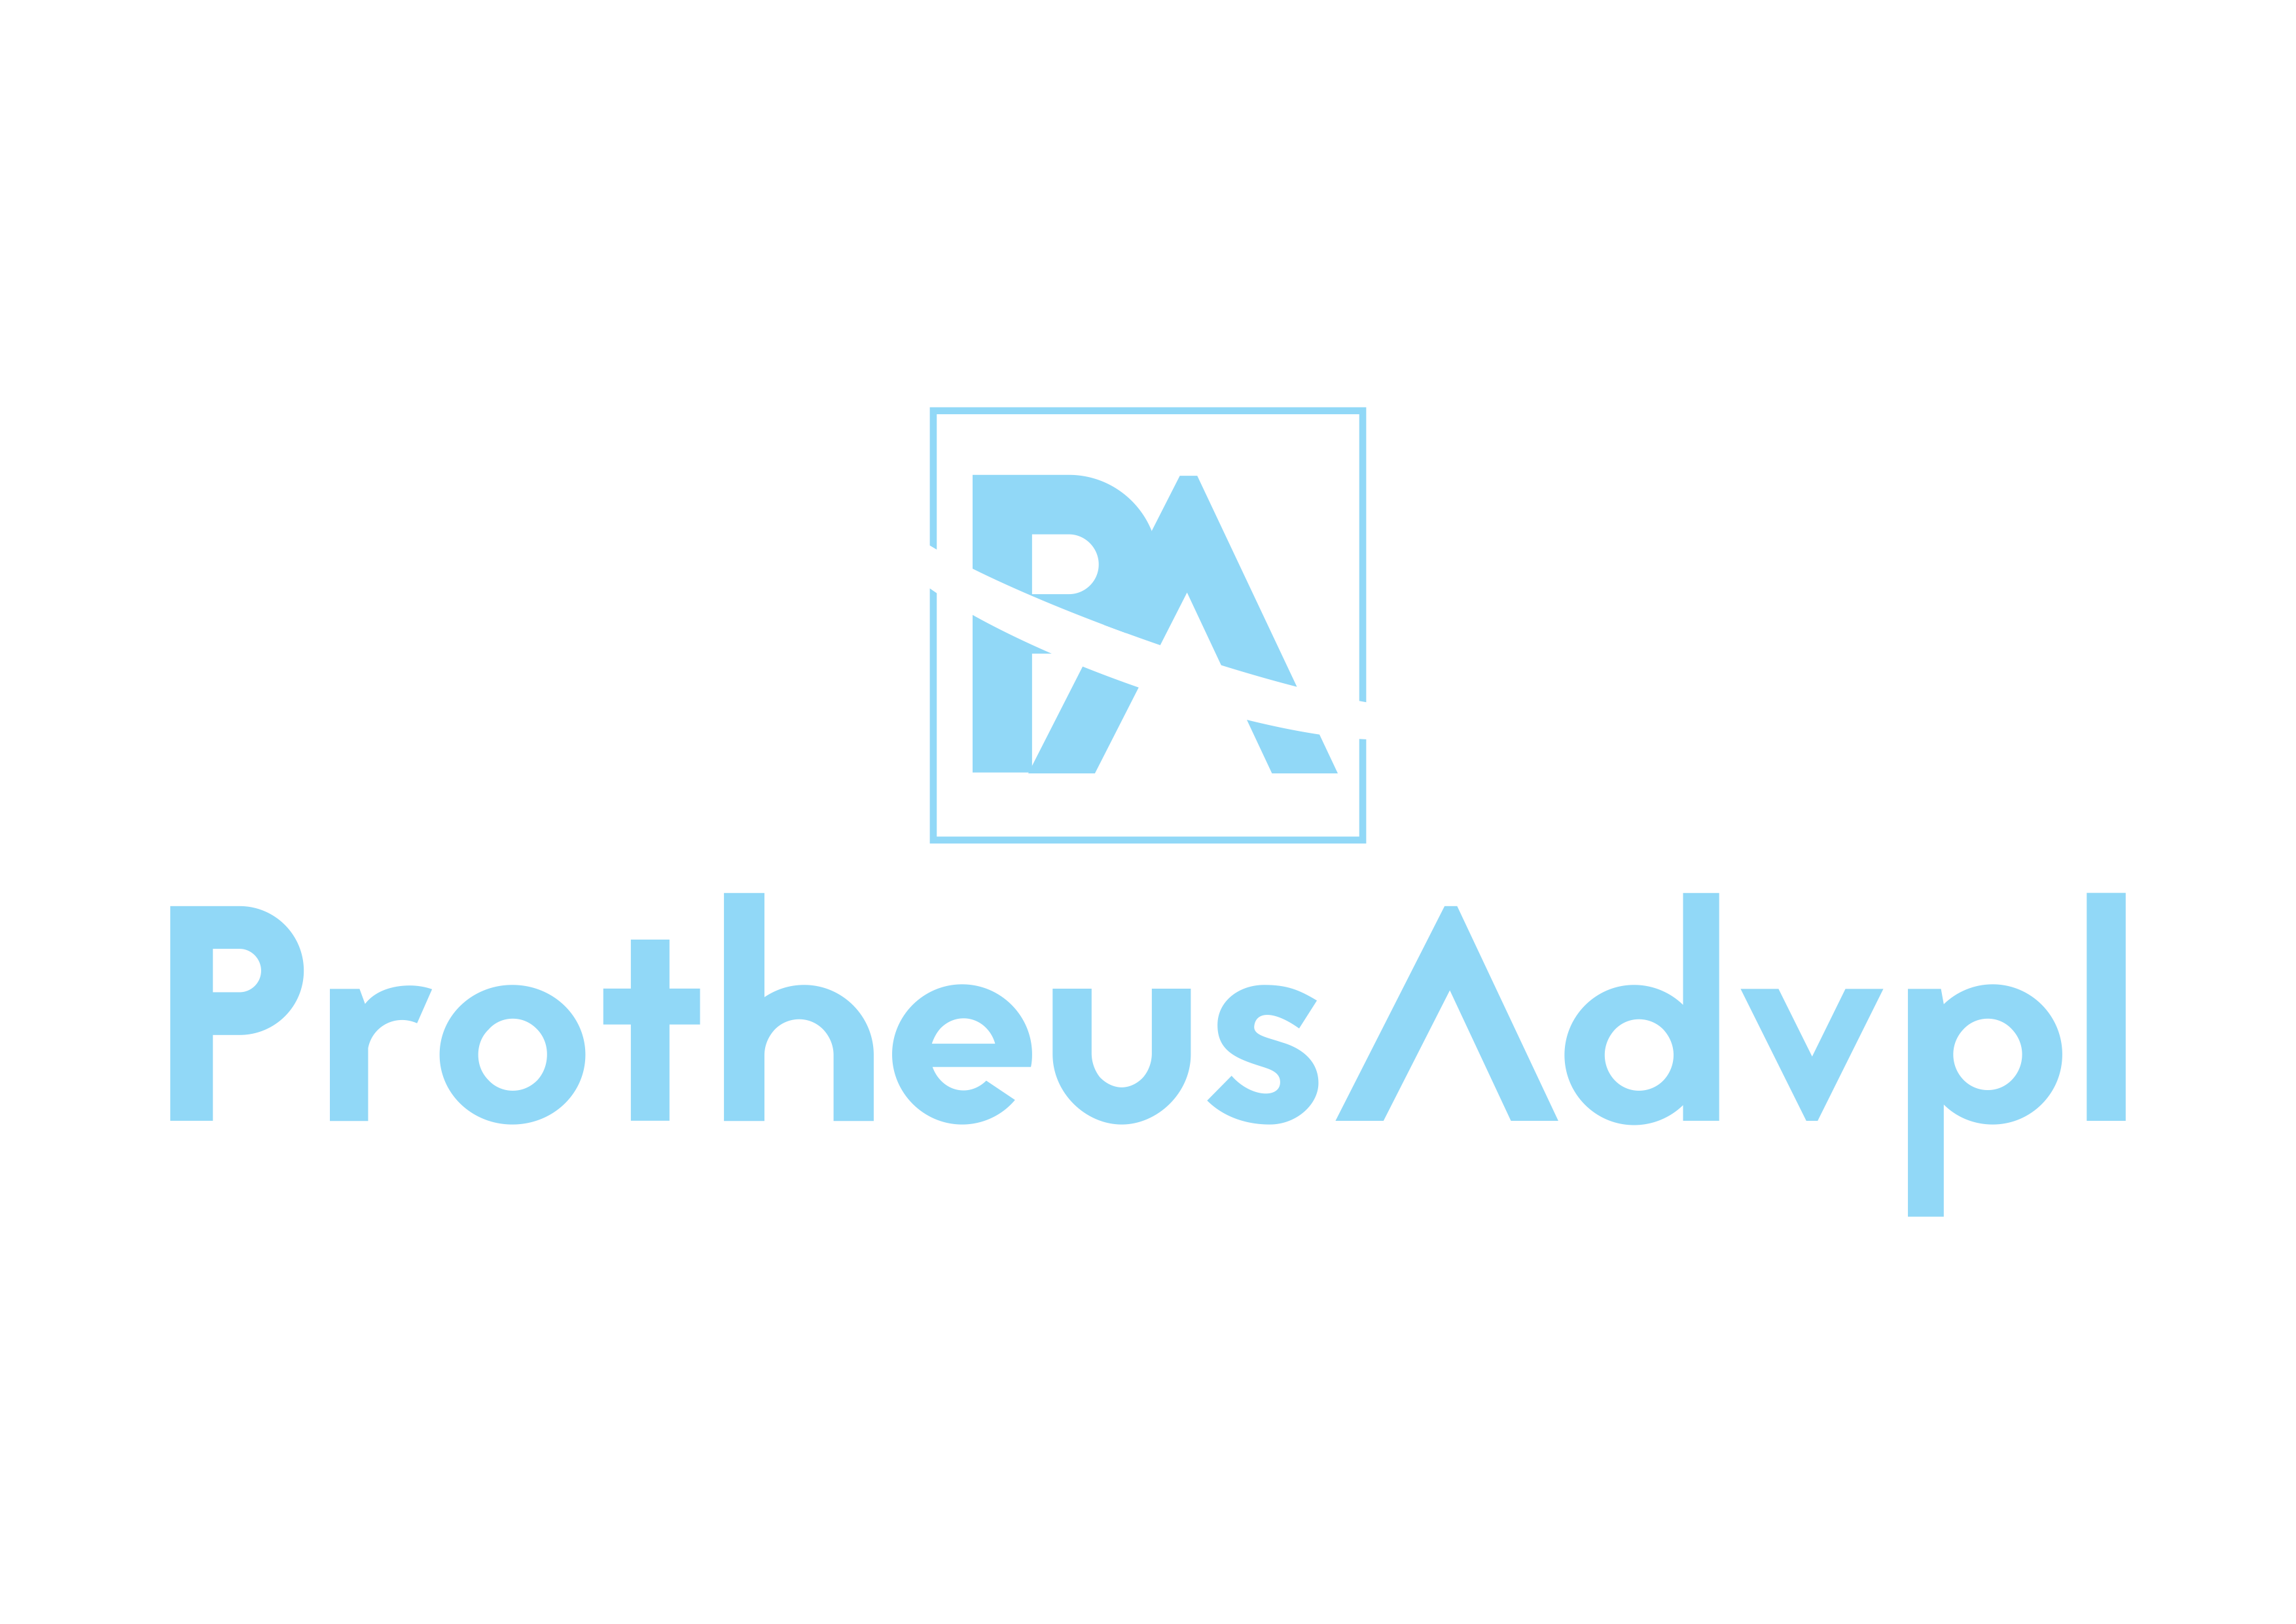 https://protheusadvpl.com.br/wp-content/uploads/2018/05/Protheus-logo.png